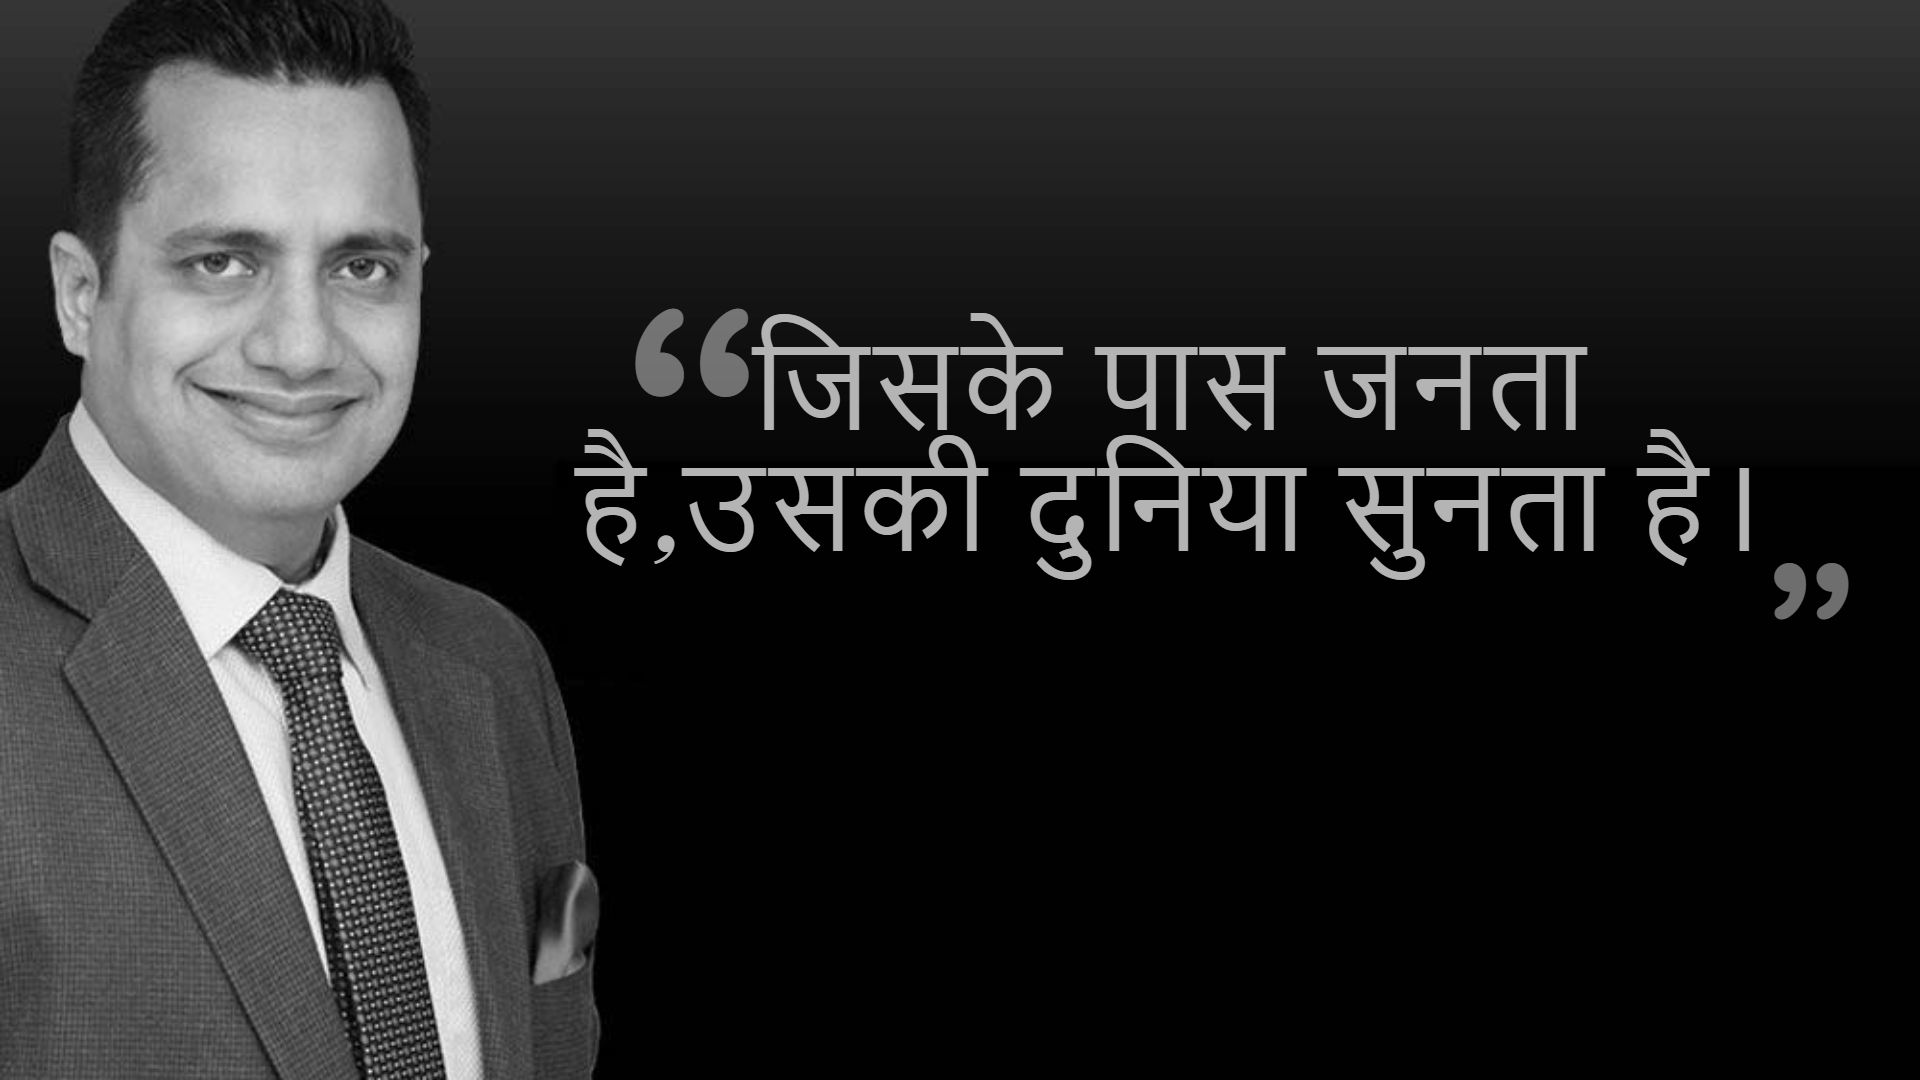 Dr. Vivek Bindra Quotes In Hindi